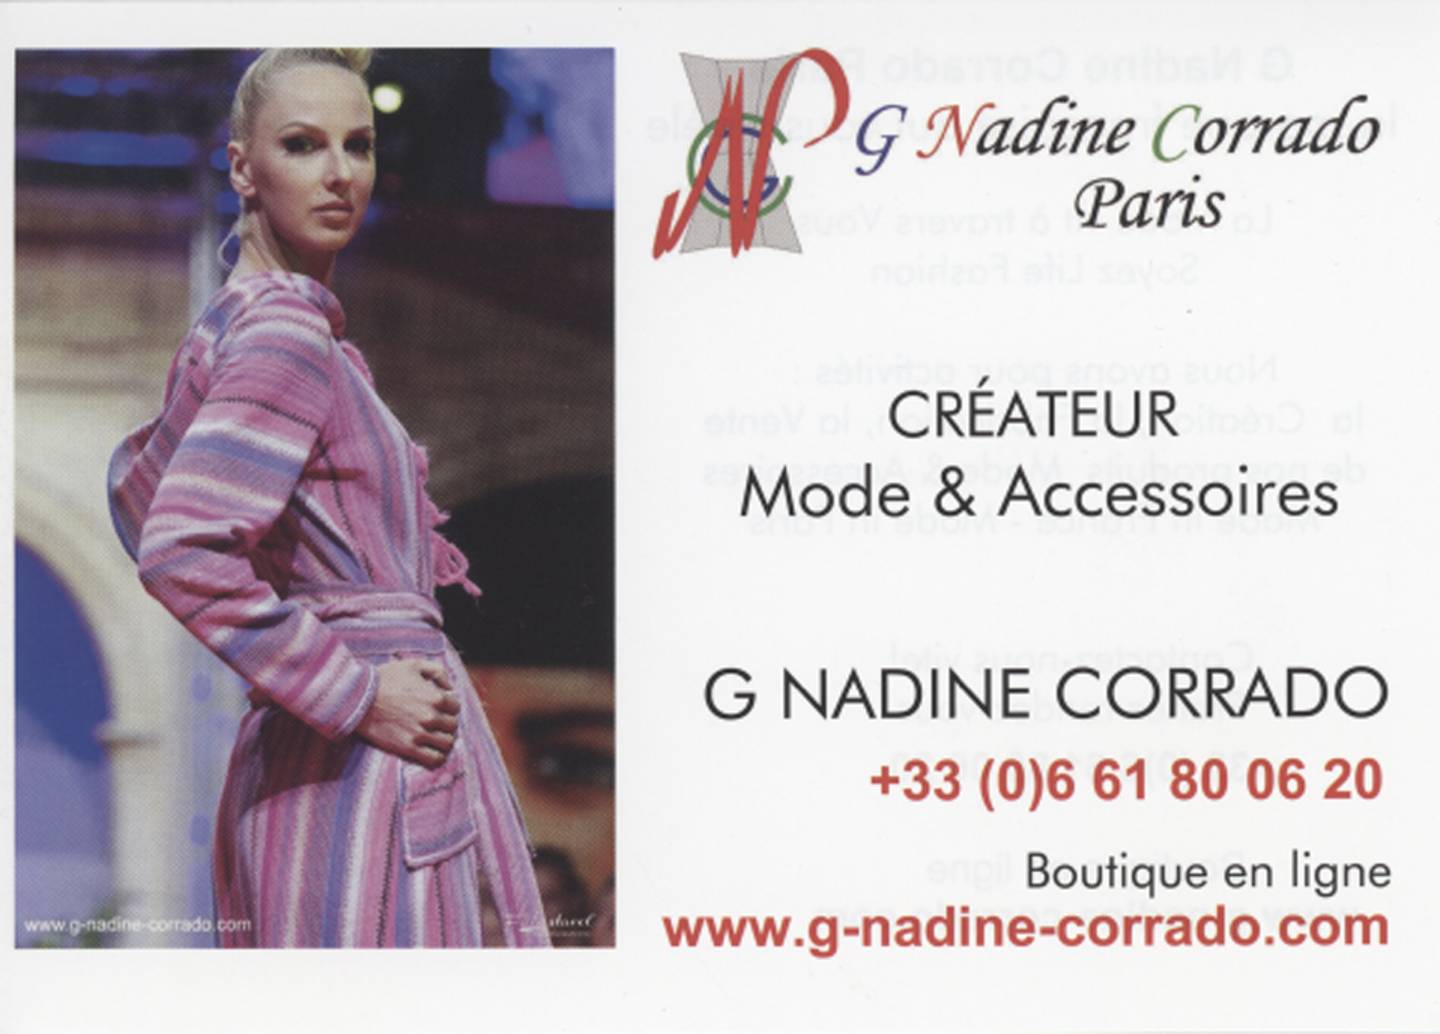 G Nadine Corrado Paris